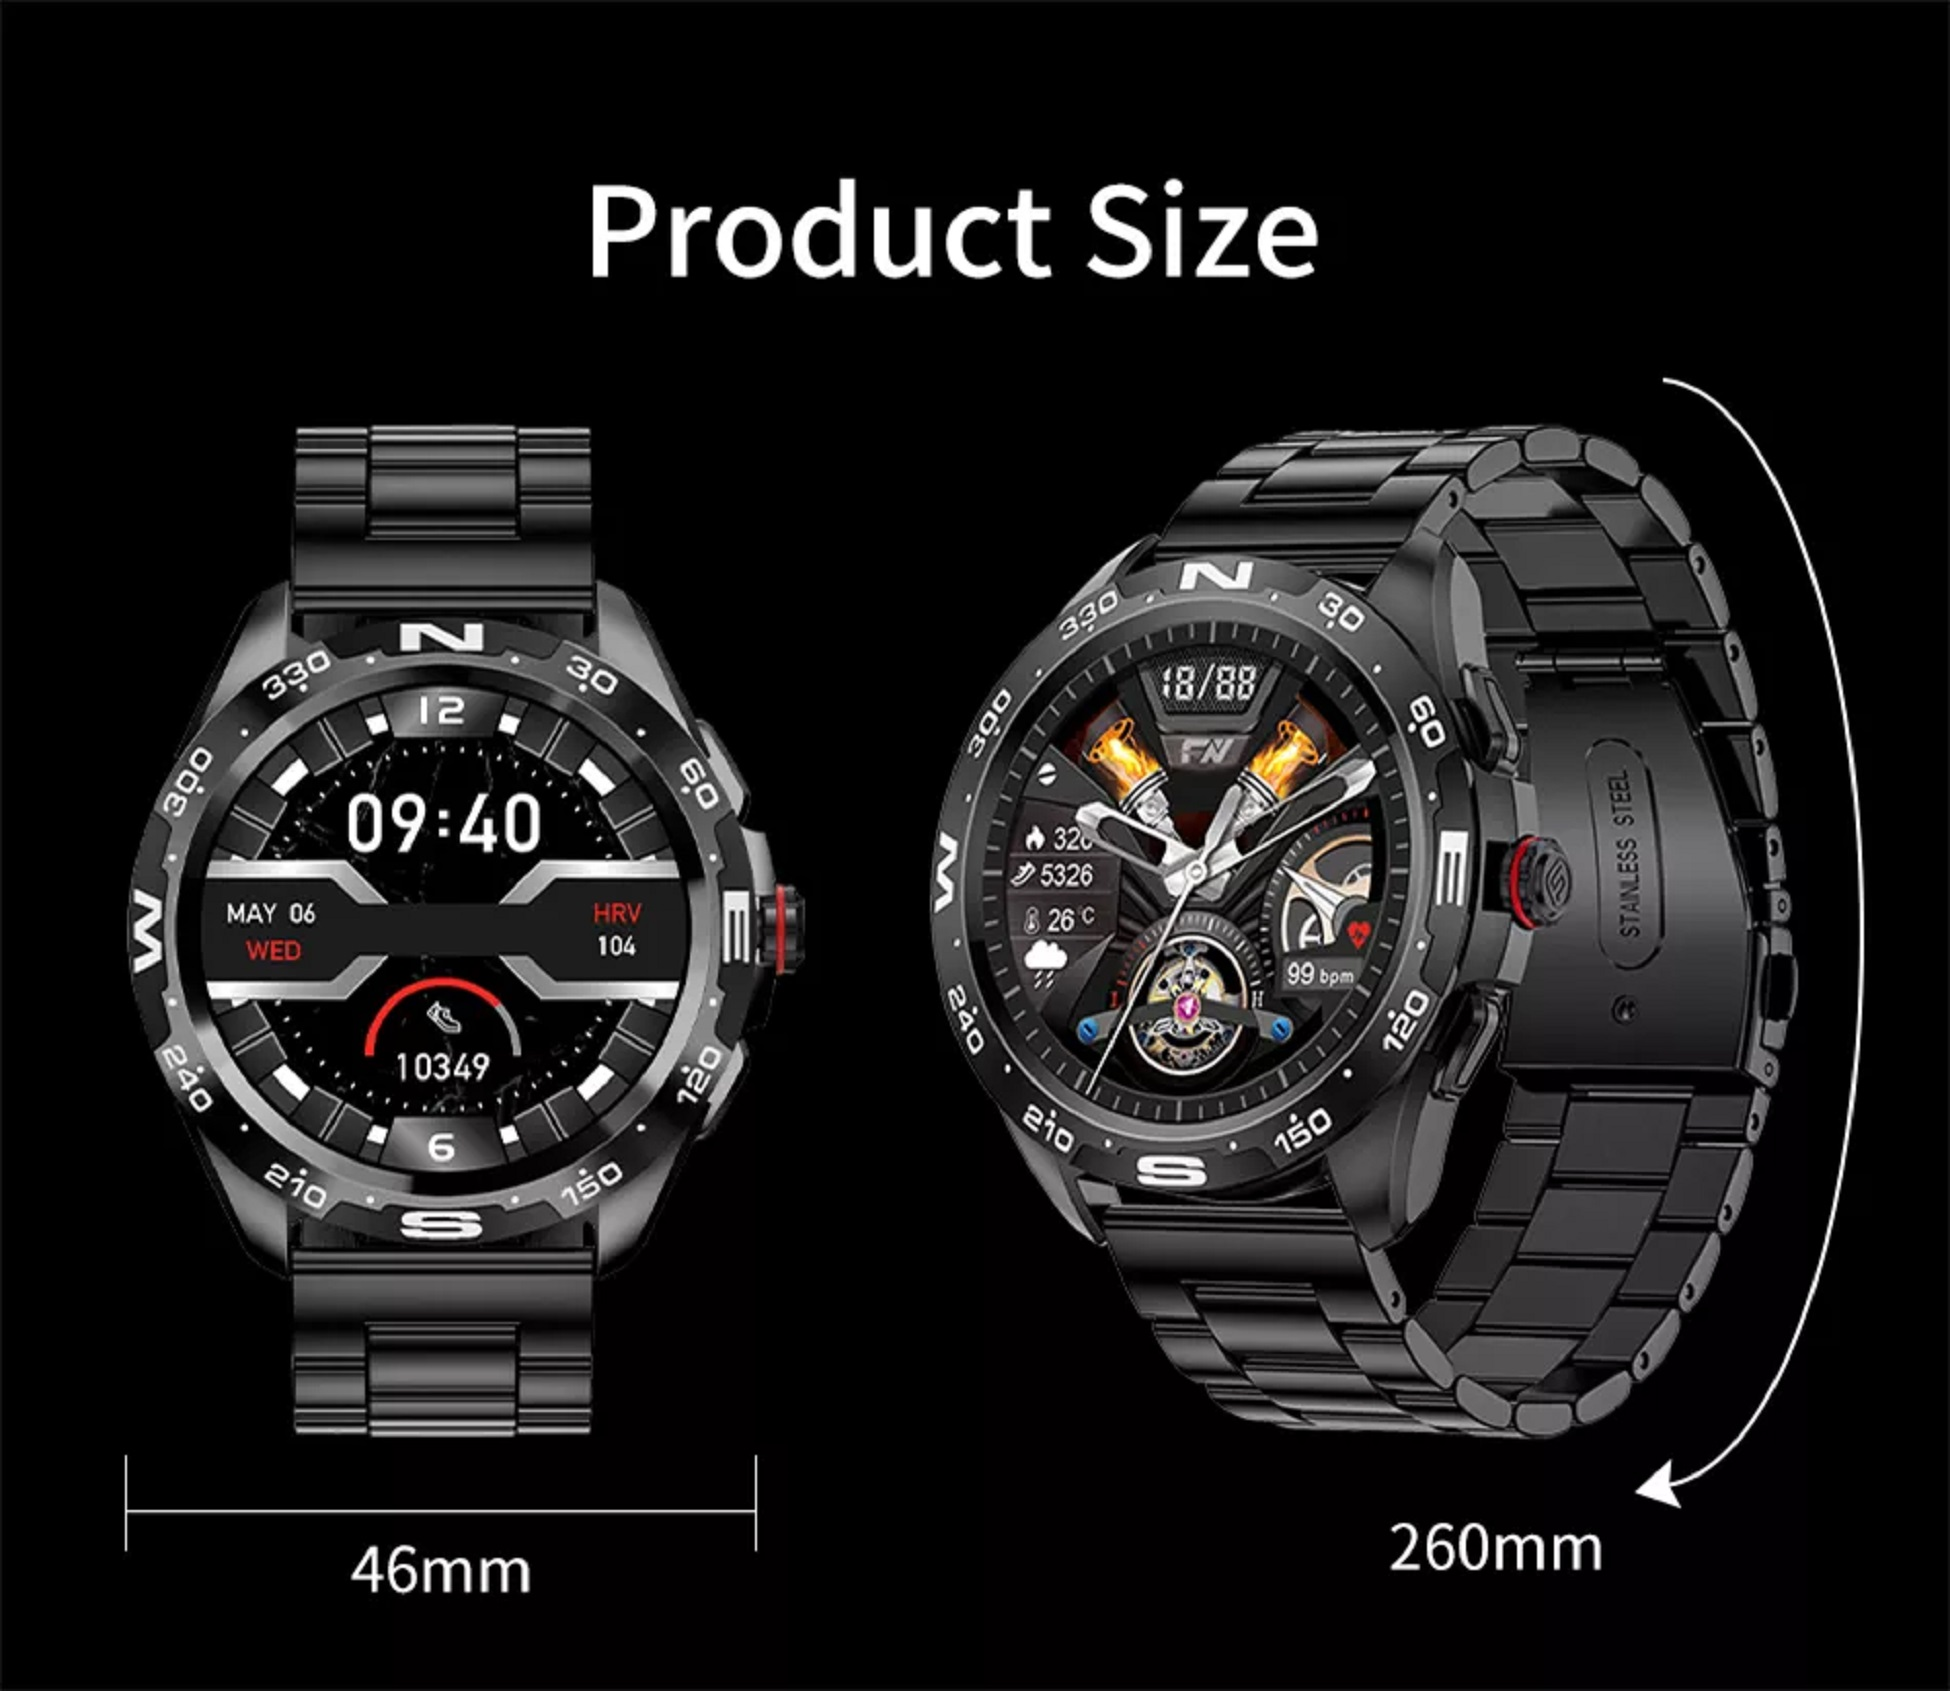 Silver Smartwatch Silicone, BW0327B LIGE